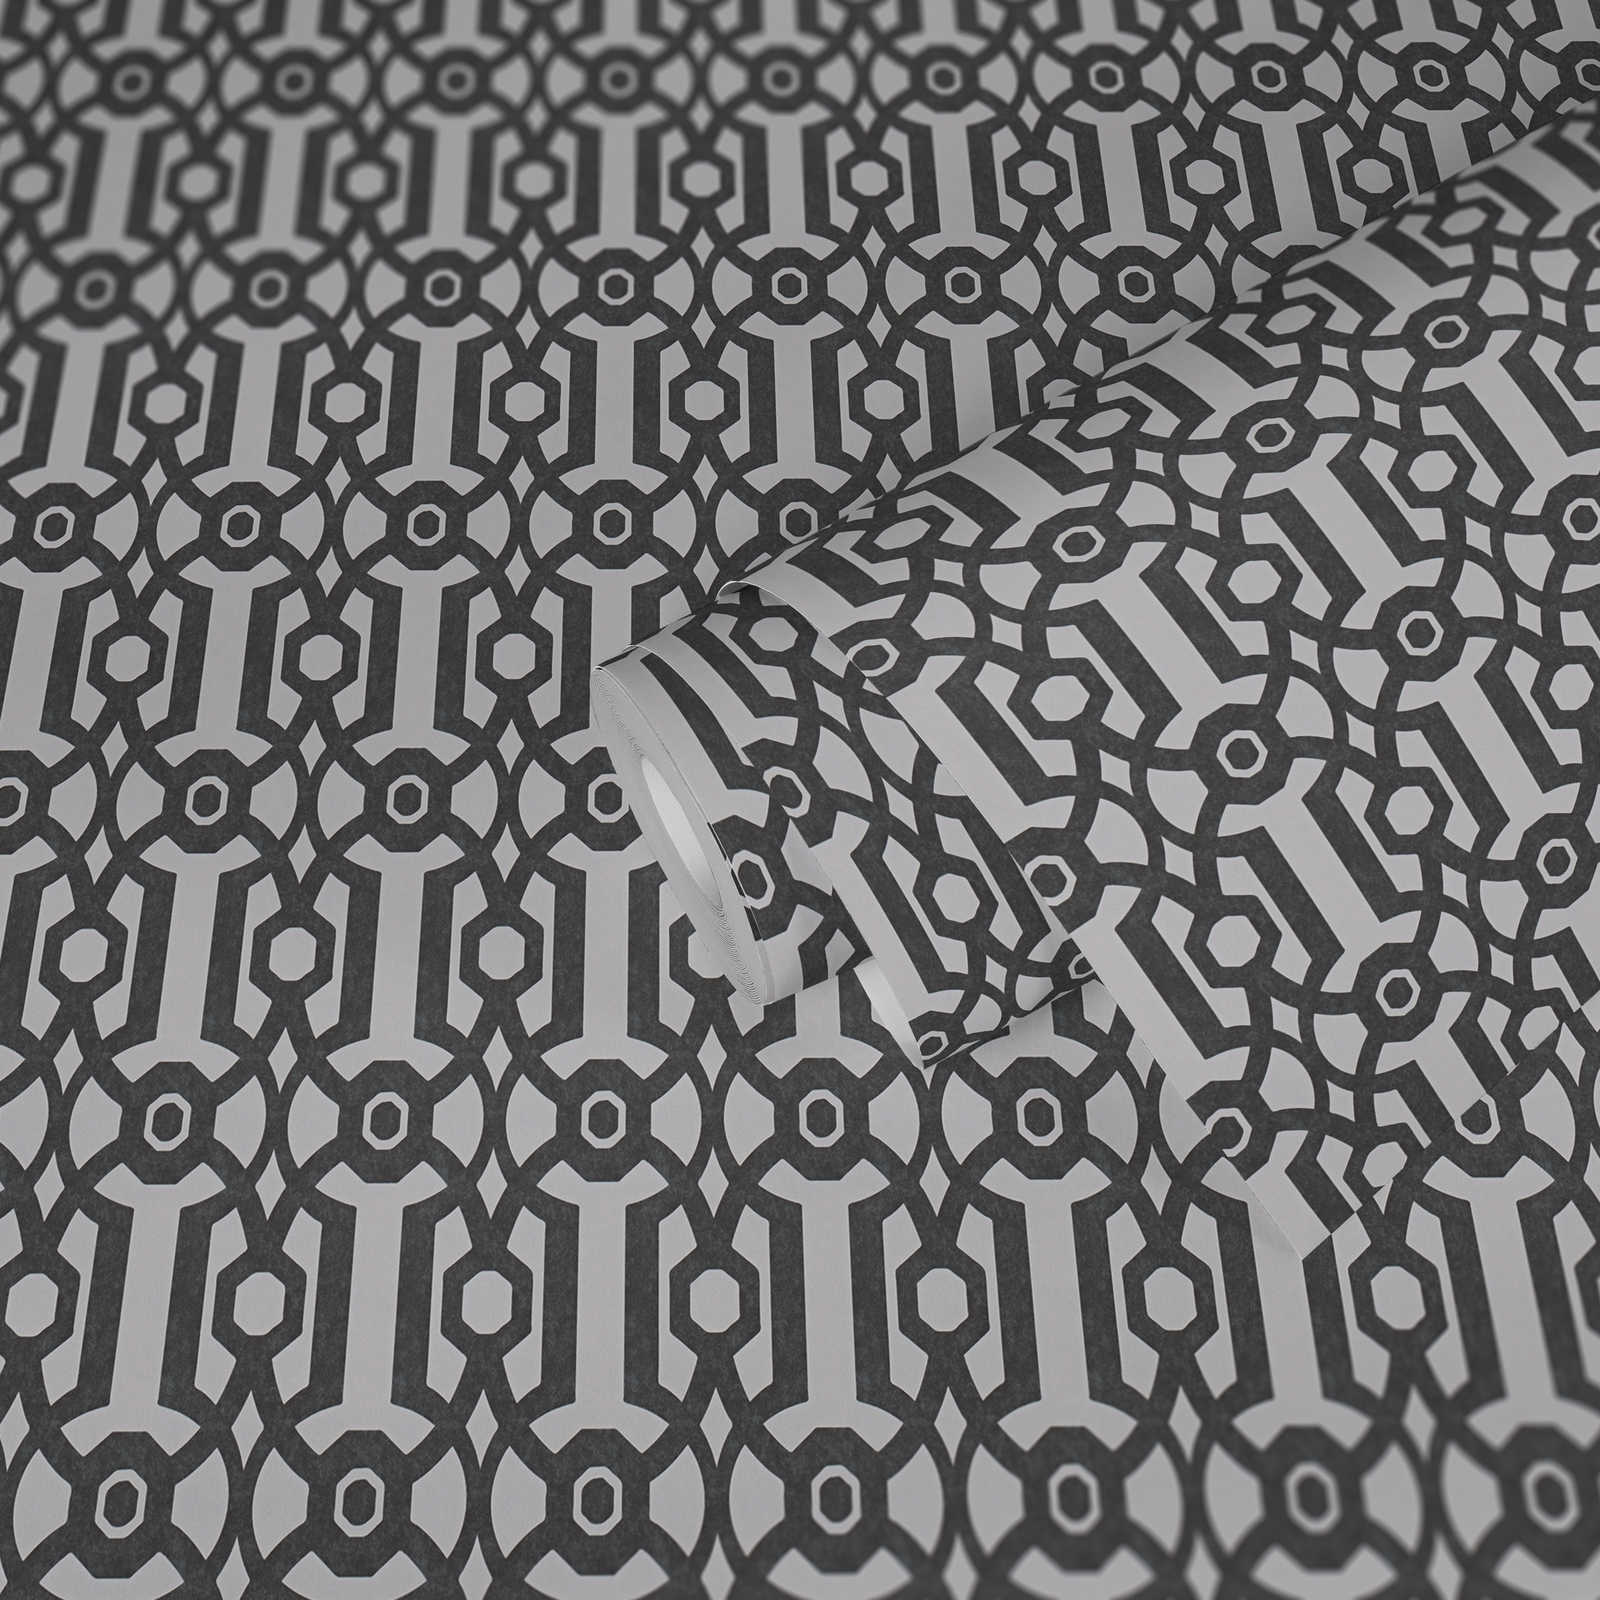             Papel pintado no tejido con patrón gráfico moderno - negro, blanco
        